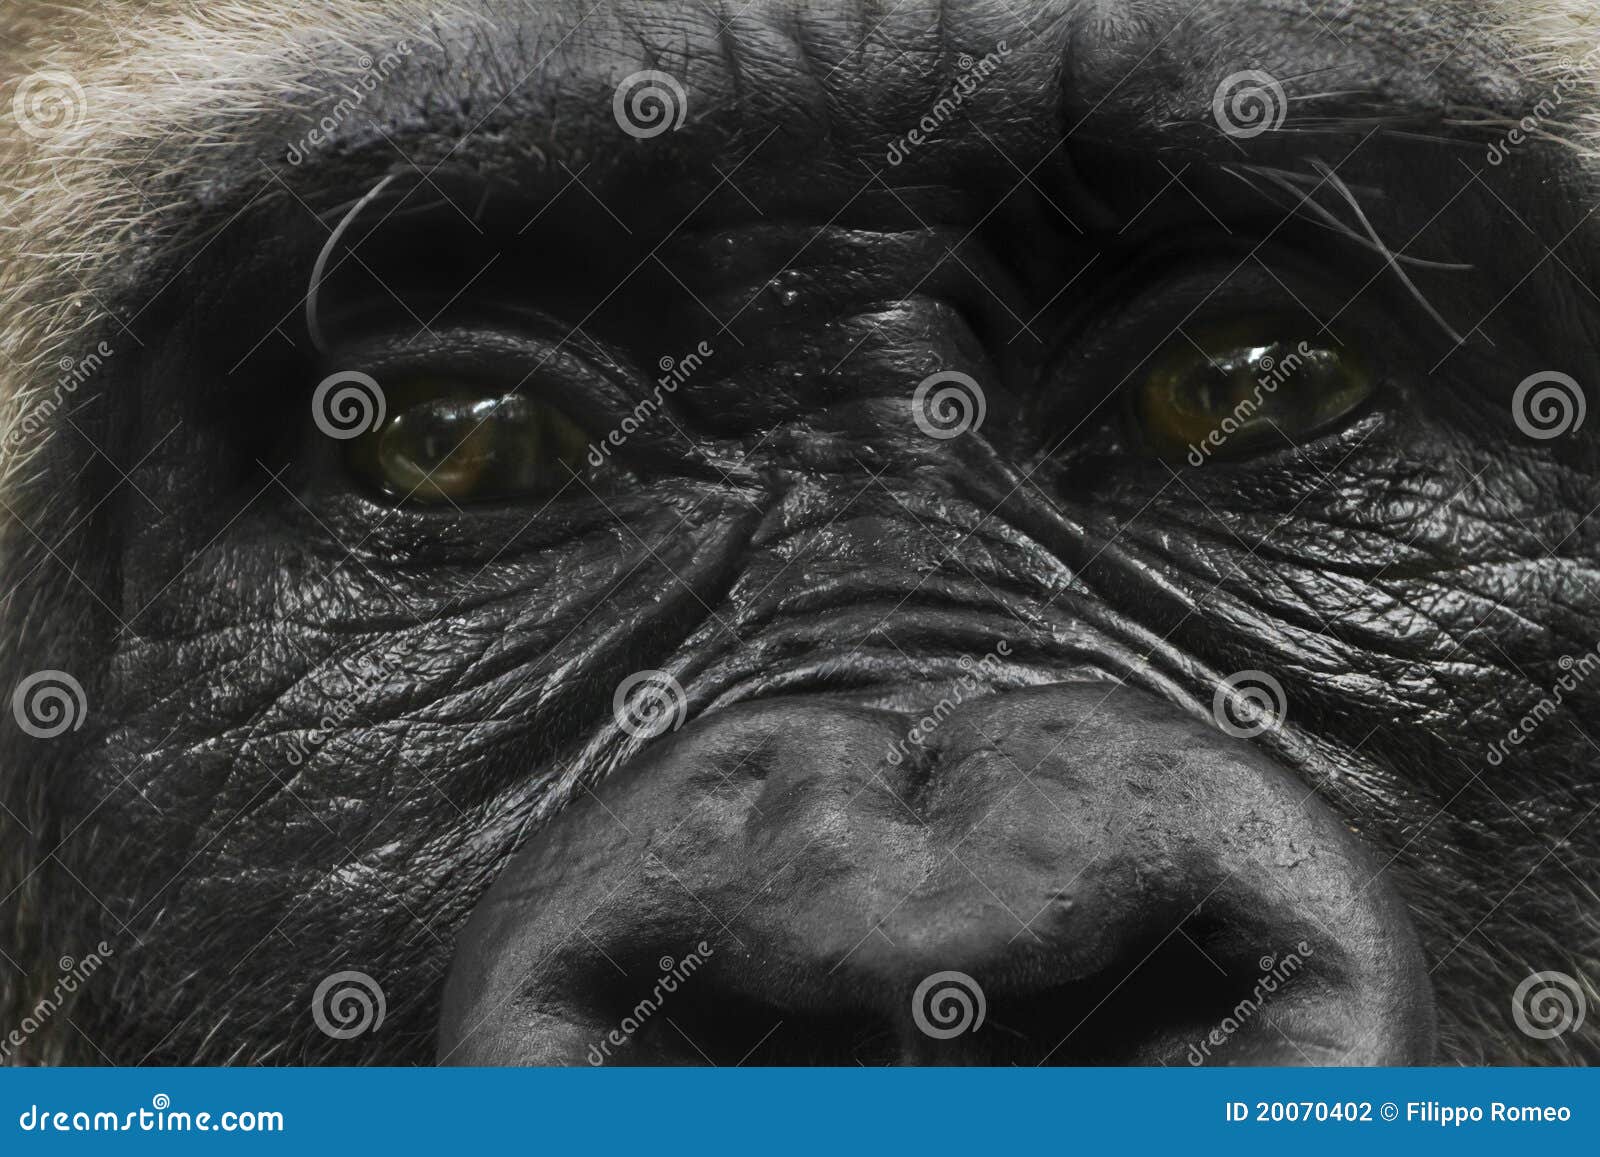 gorilla glance